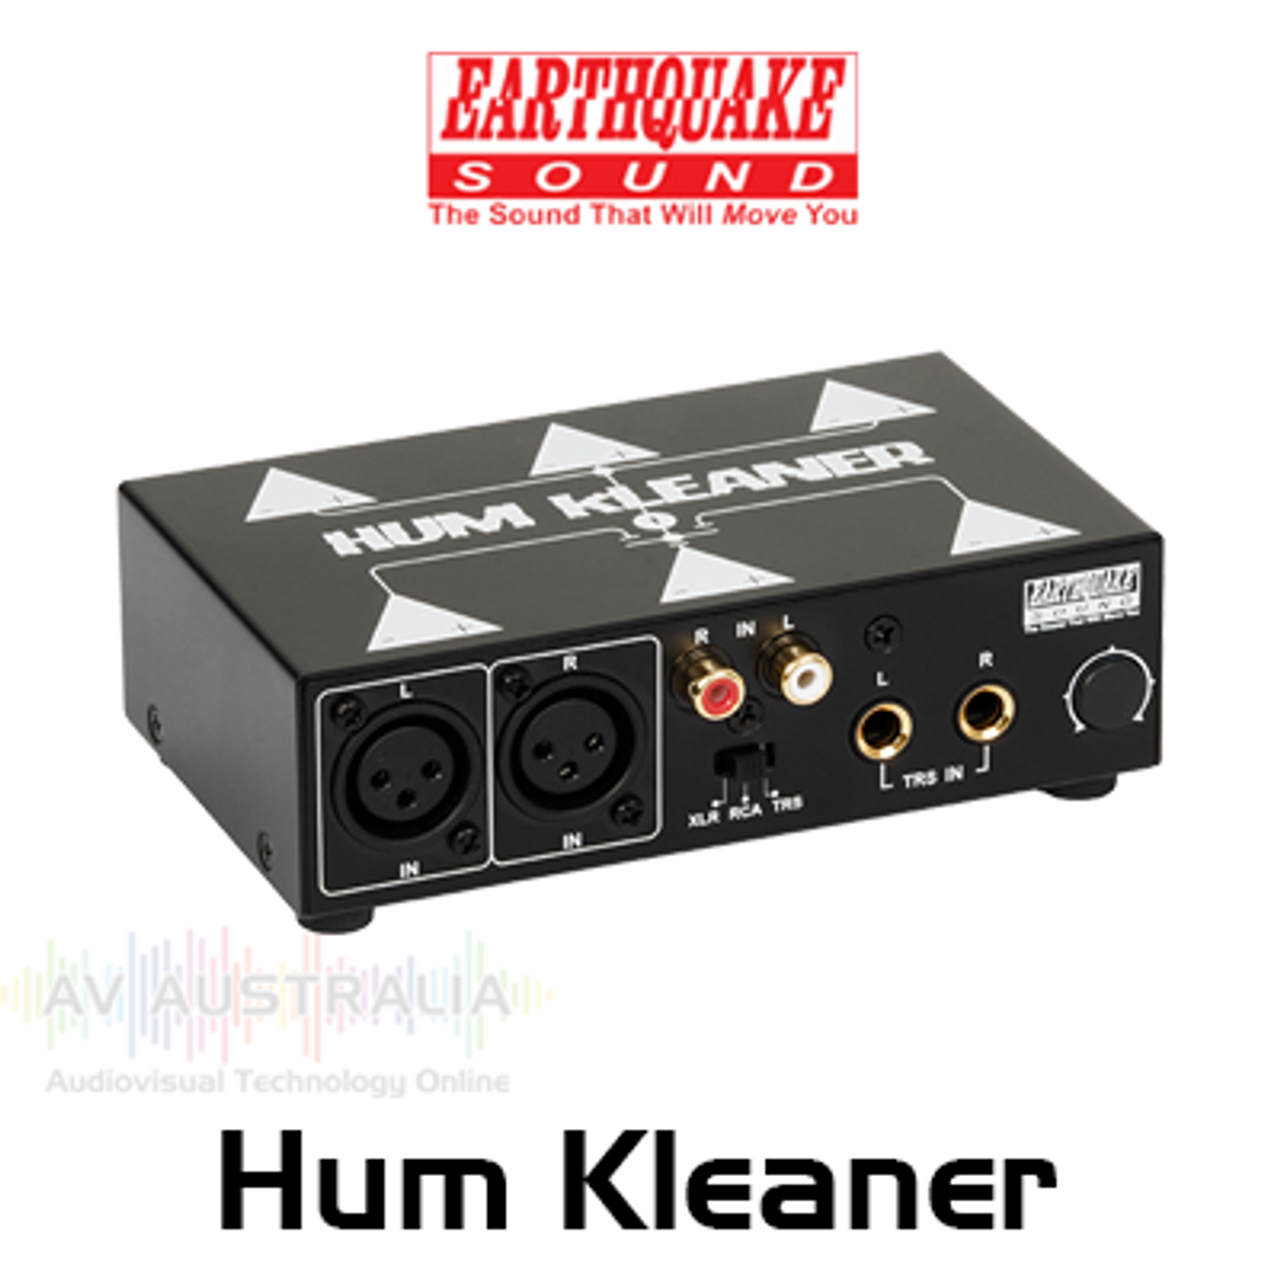 EarthQuake Hum Kleaner 2-Channel Hum Cleaner